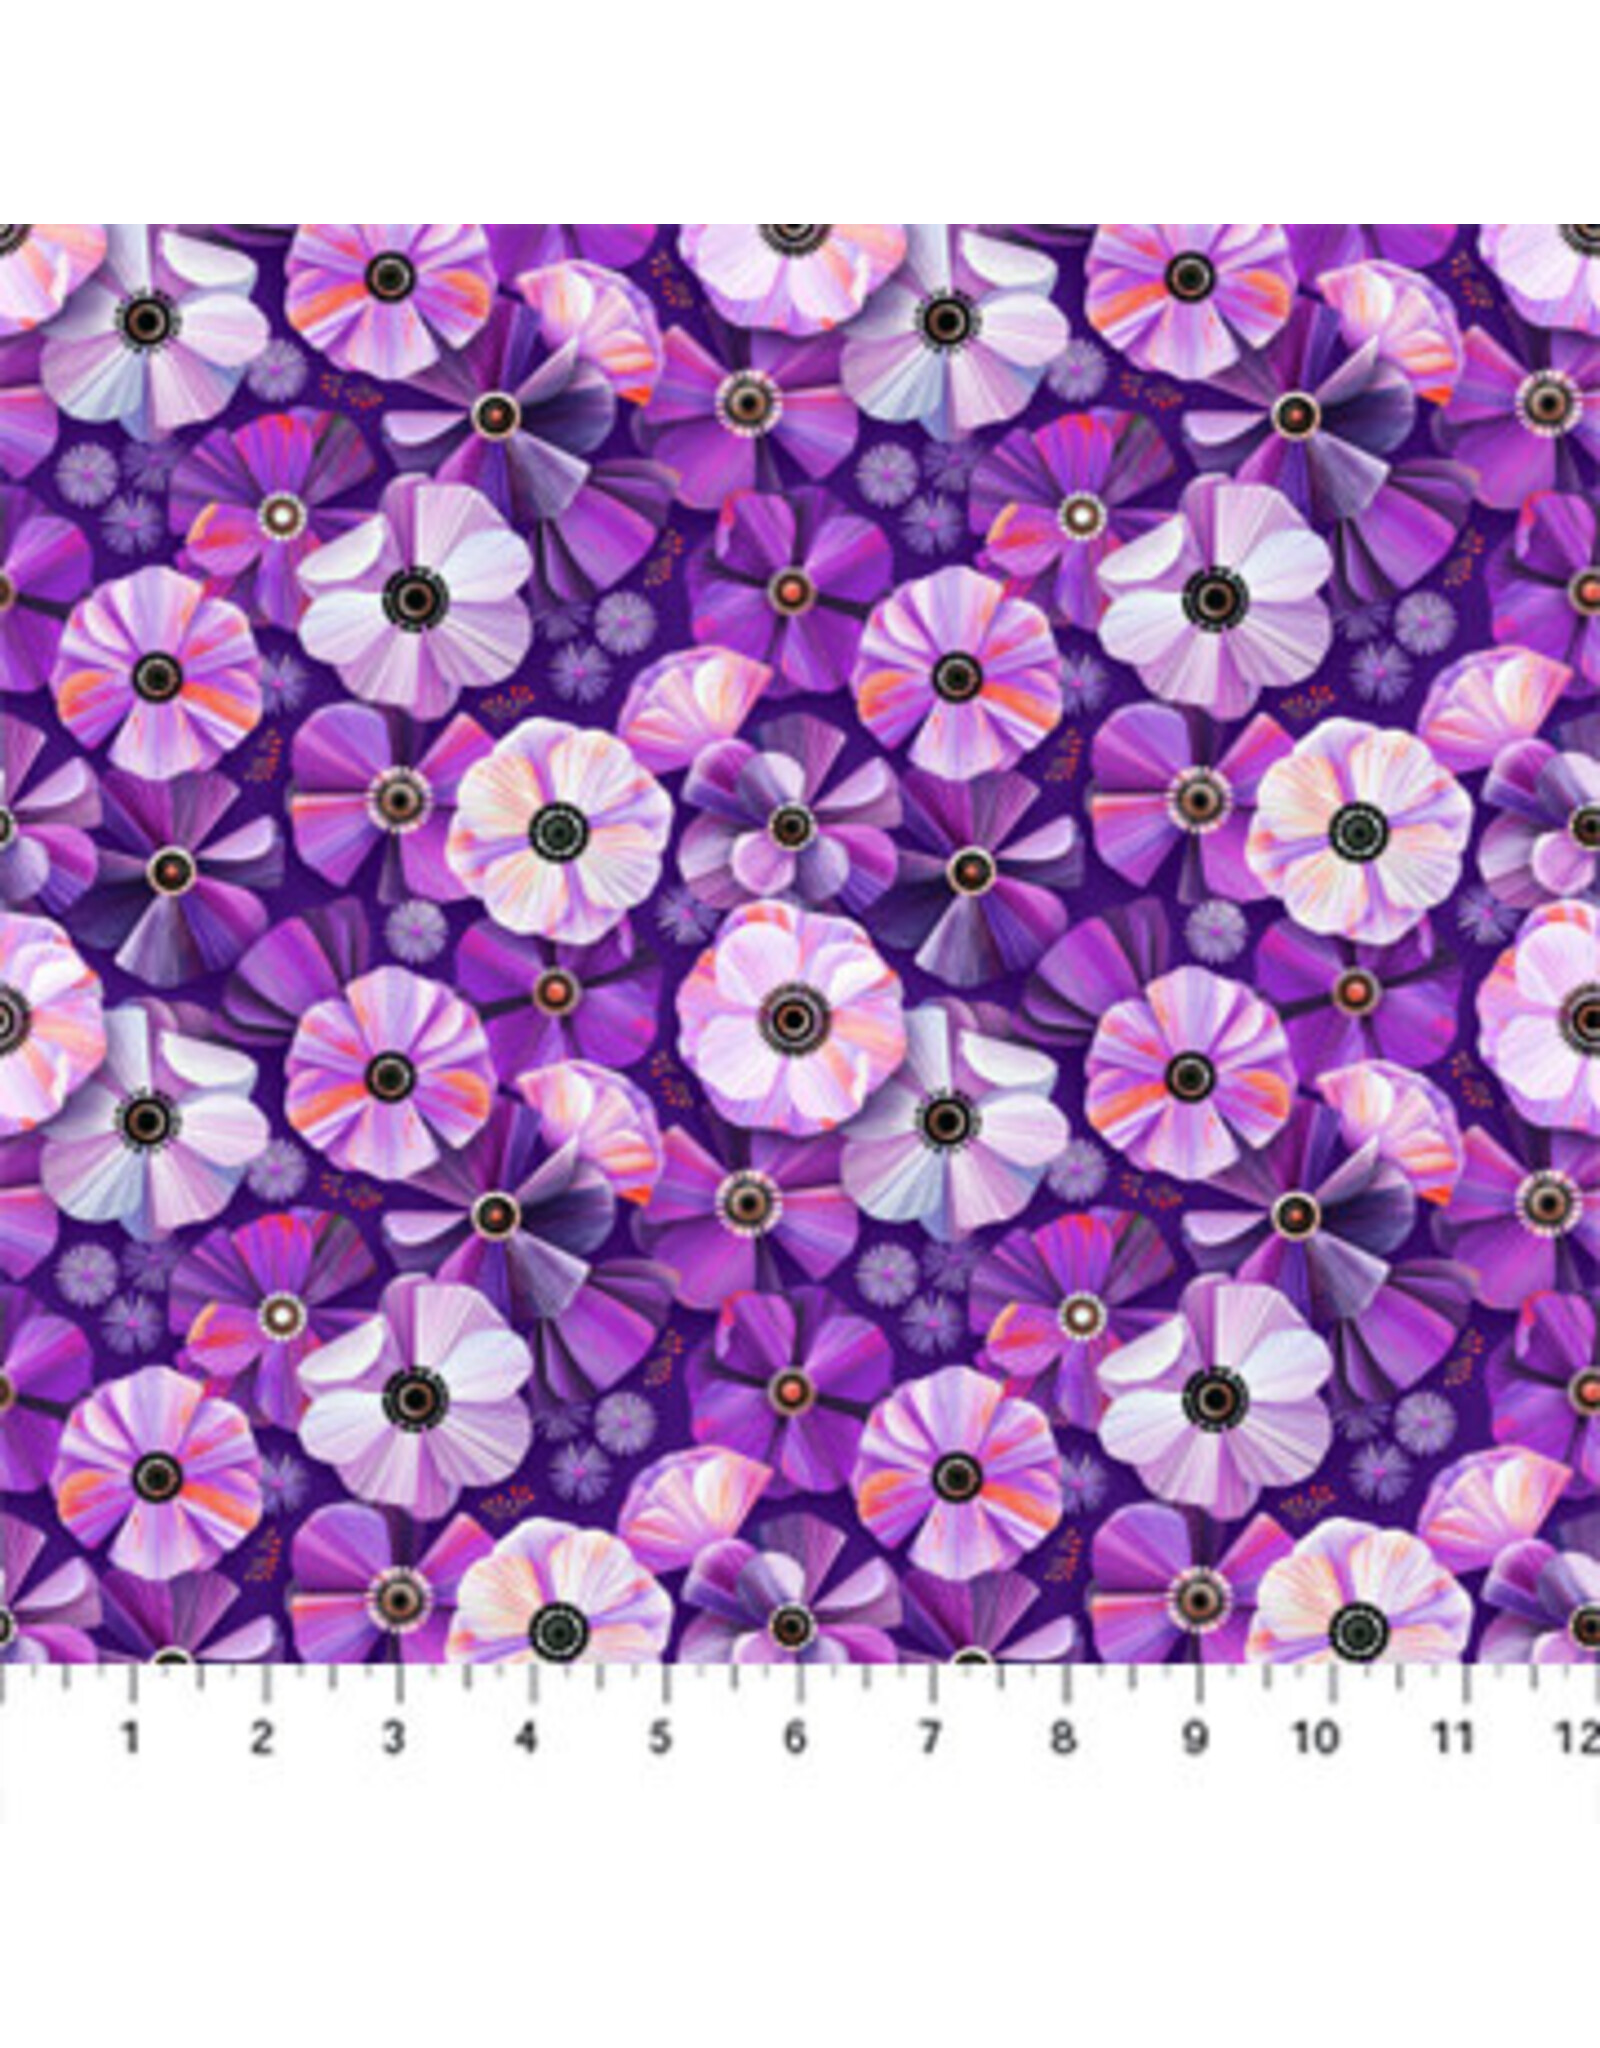 Figo Sunday - Poppy Heads Purple coupon (± 54 x 110 cm)